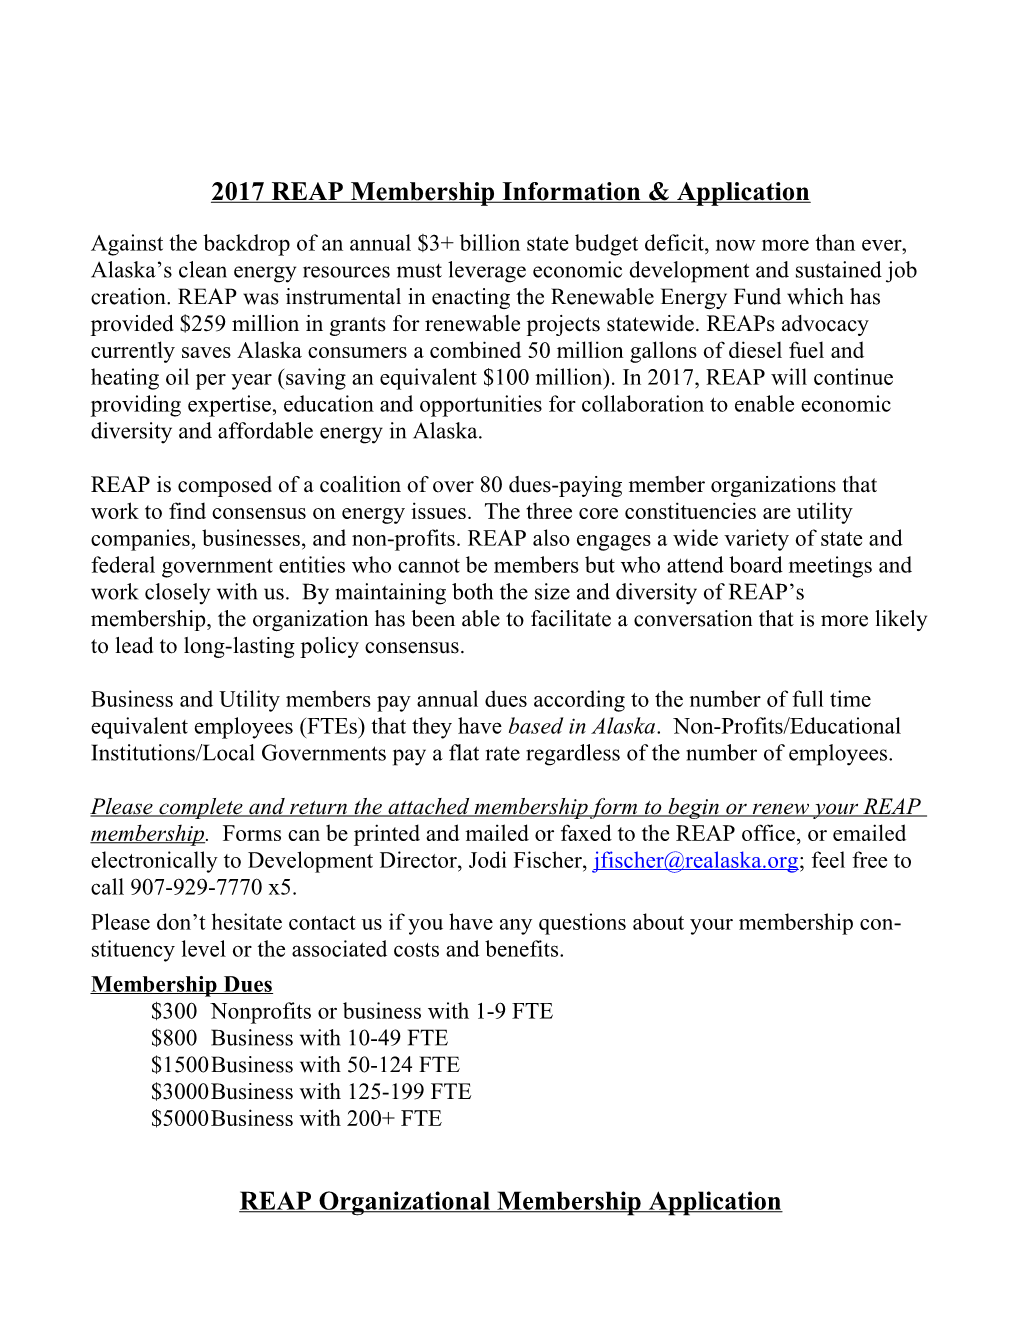 2017REAP Membership Information & Application